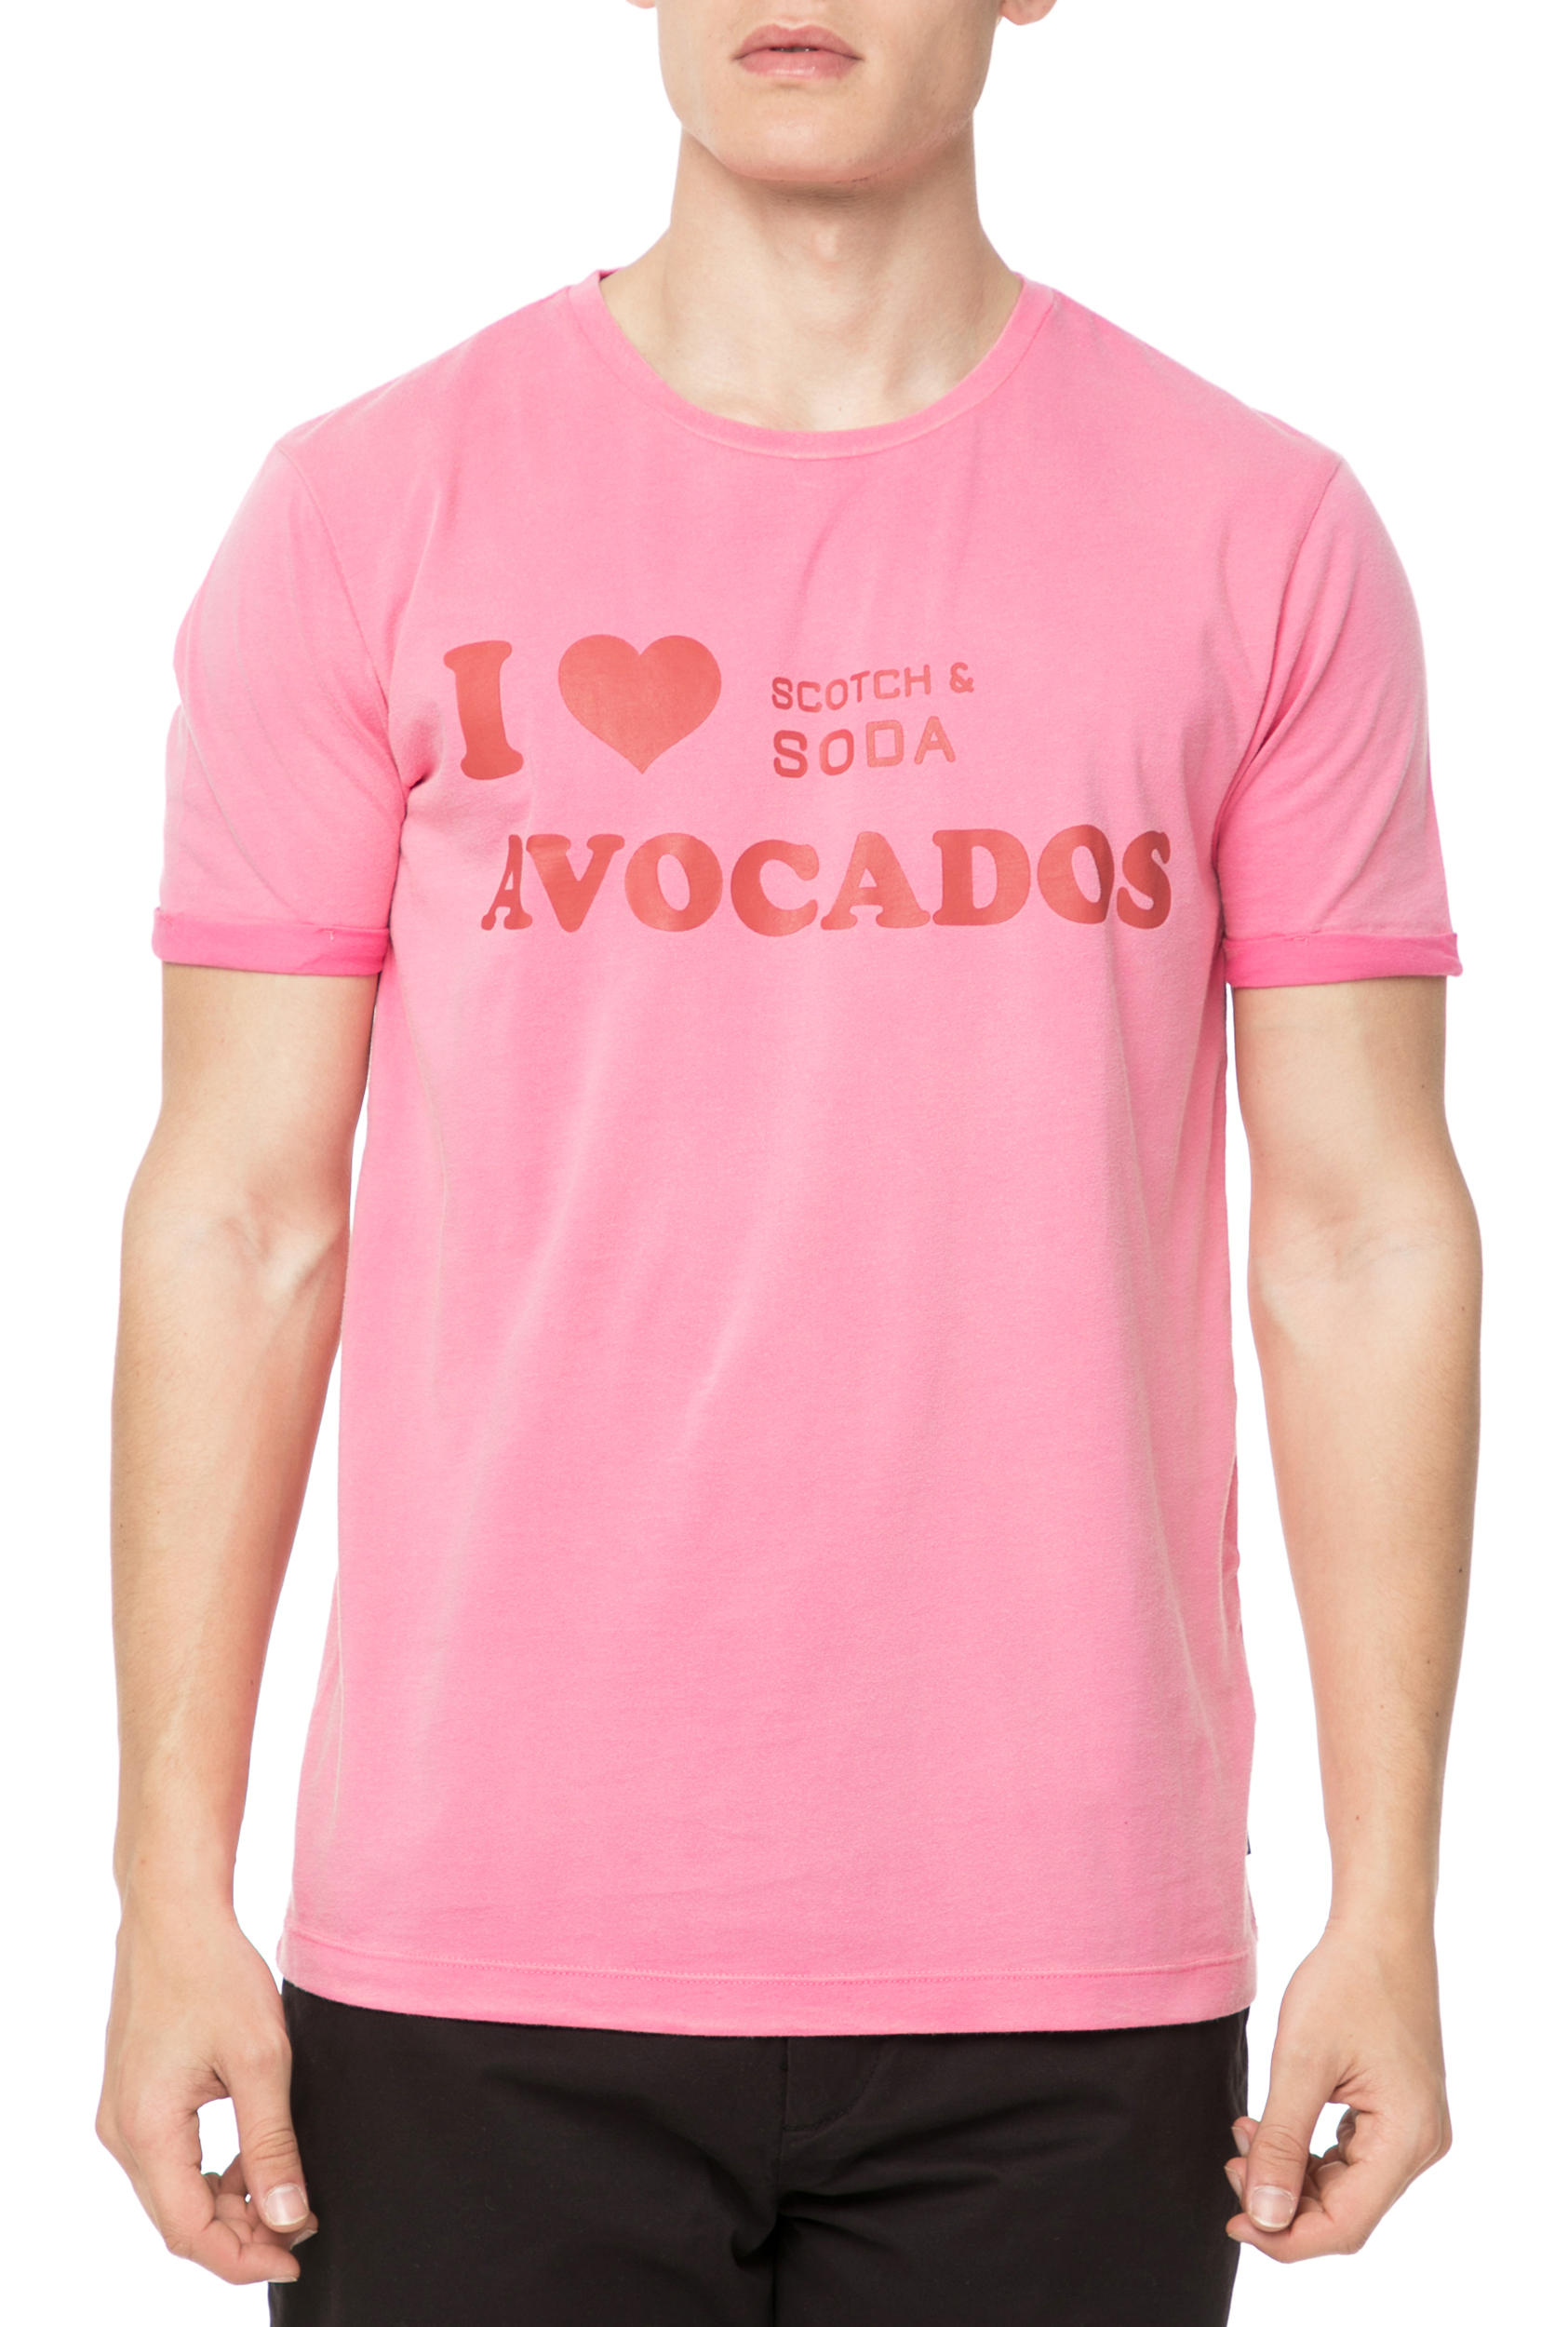 SCOTCH & SODA SCOTCH & SODA - Ανδρικό t-shirt Scotch & Soda Sun-bleached ροζ